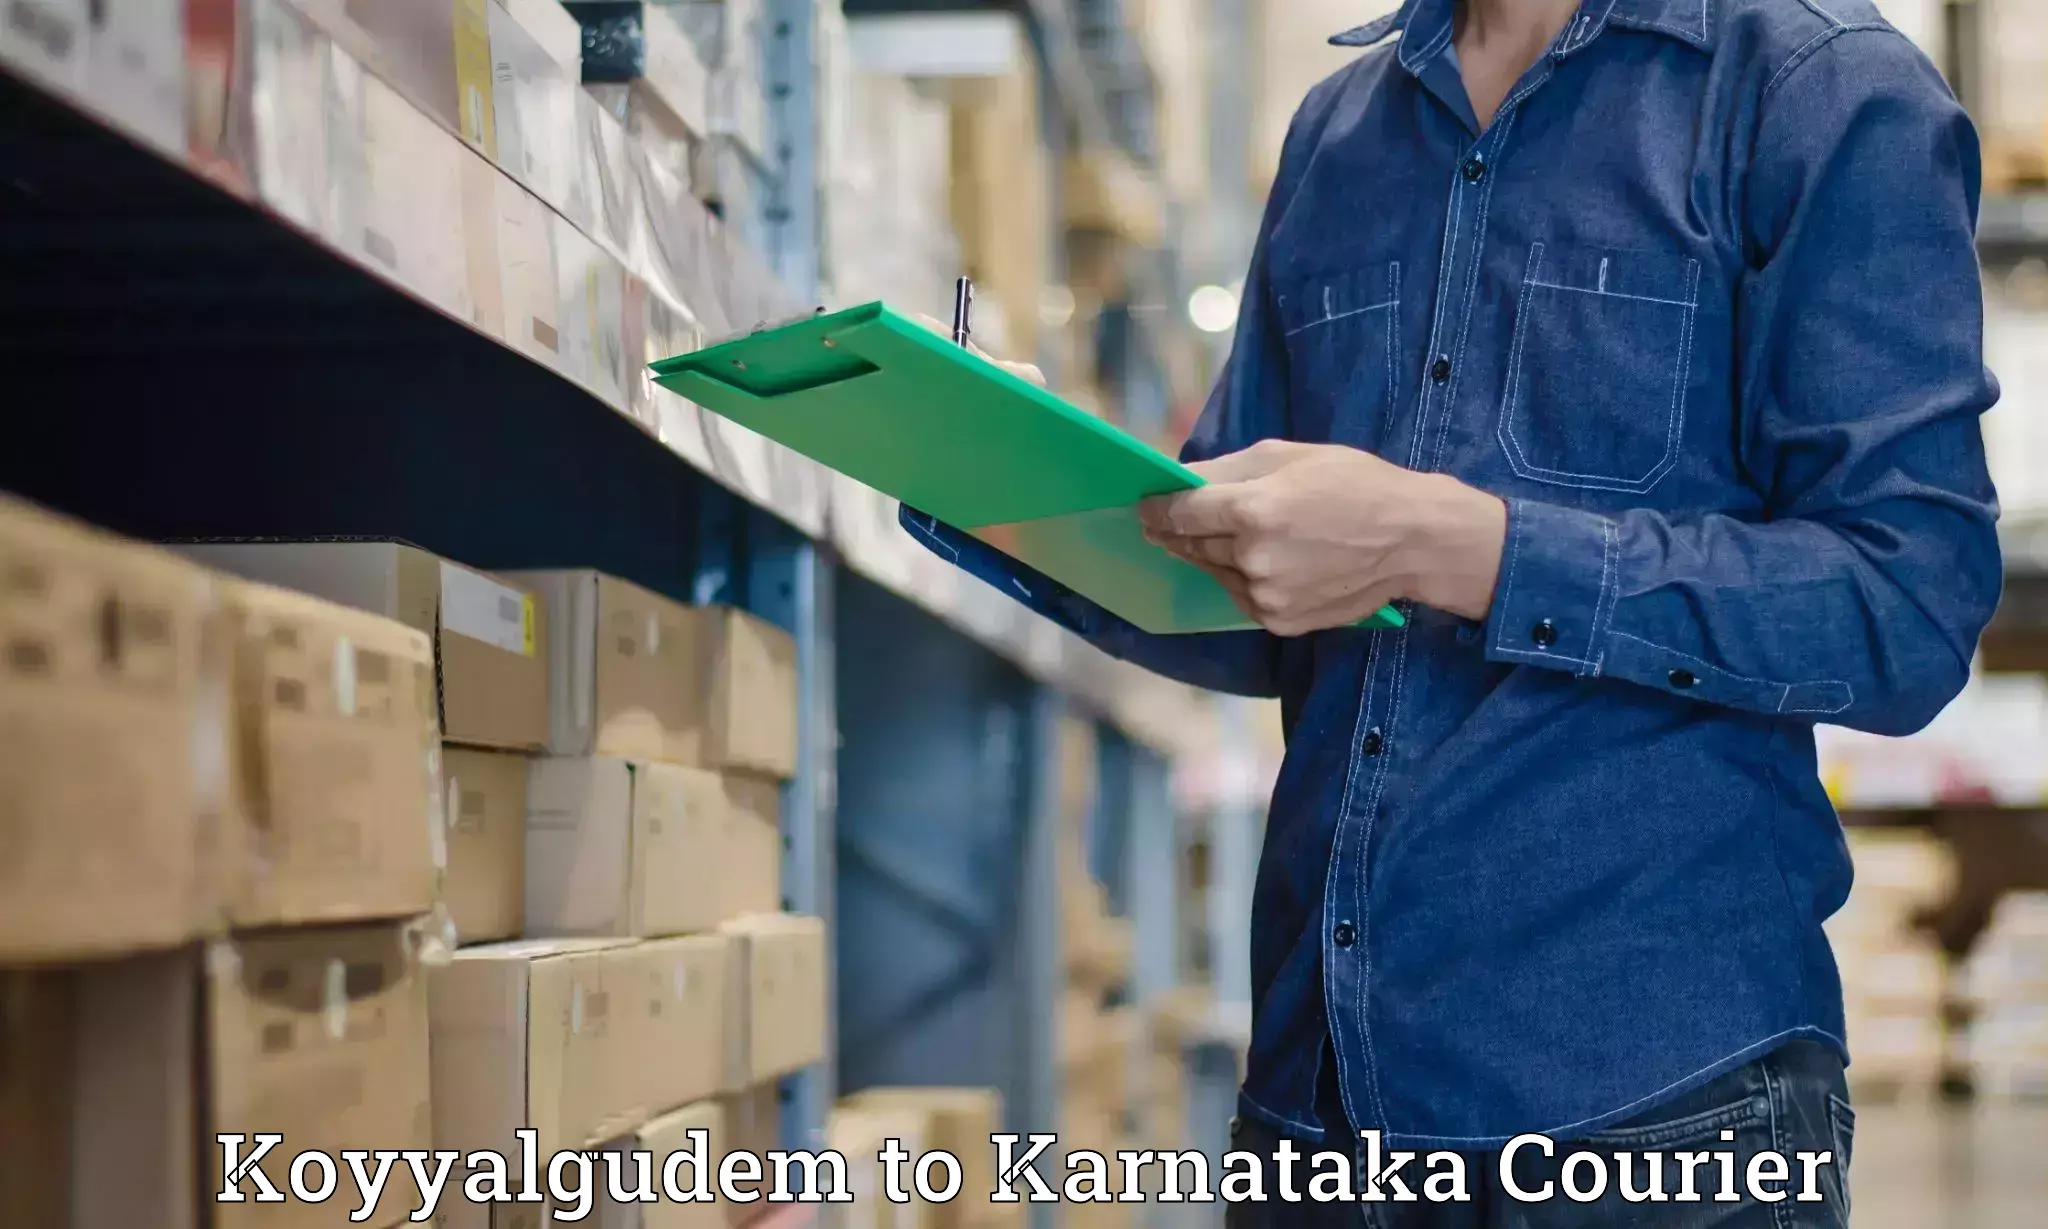 Express postal services in Koyyalgudem to Mangalore Port